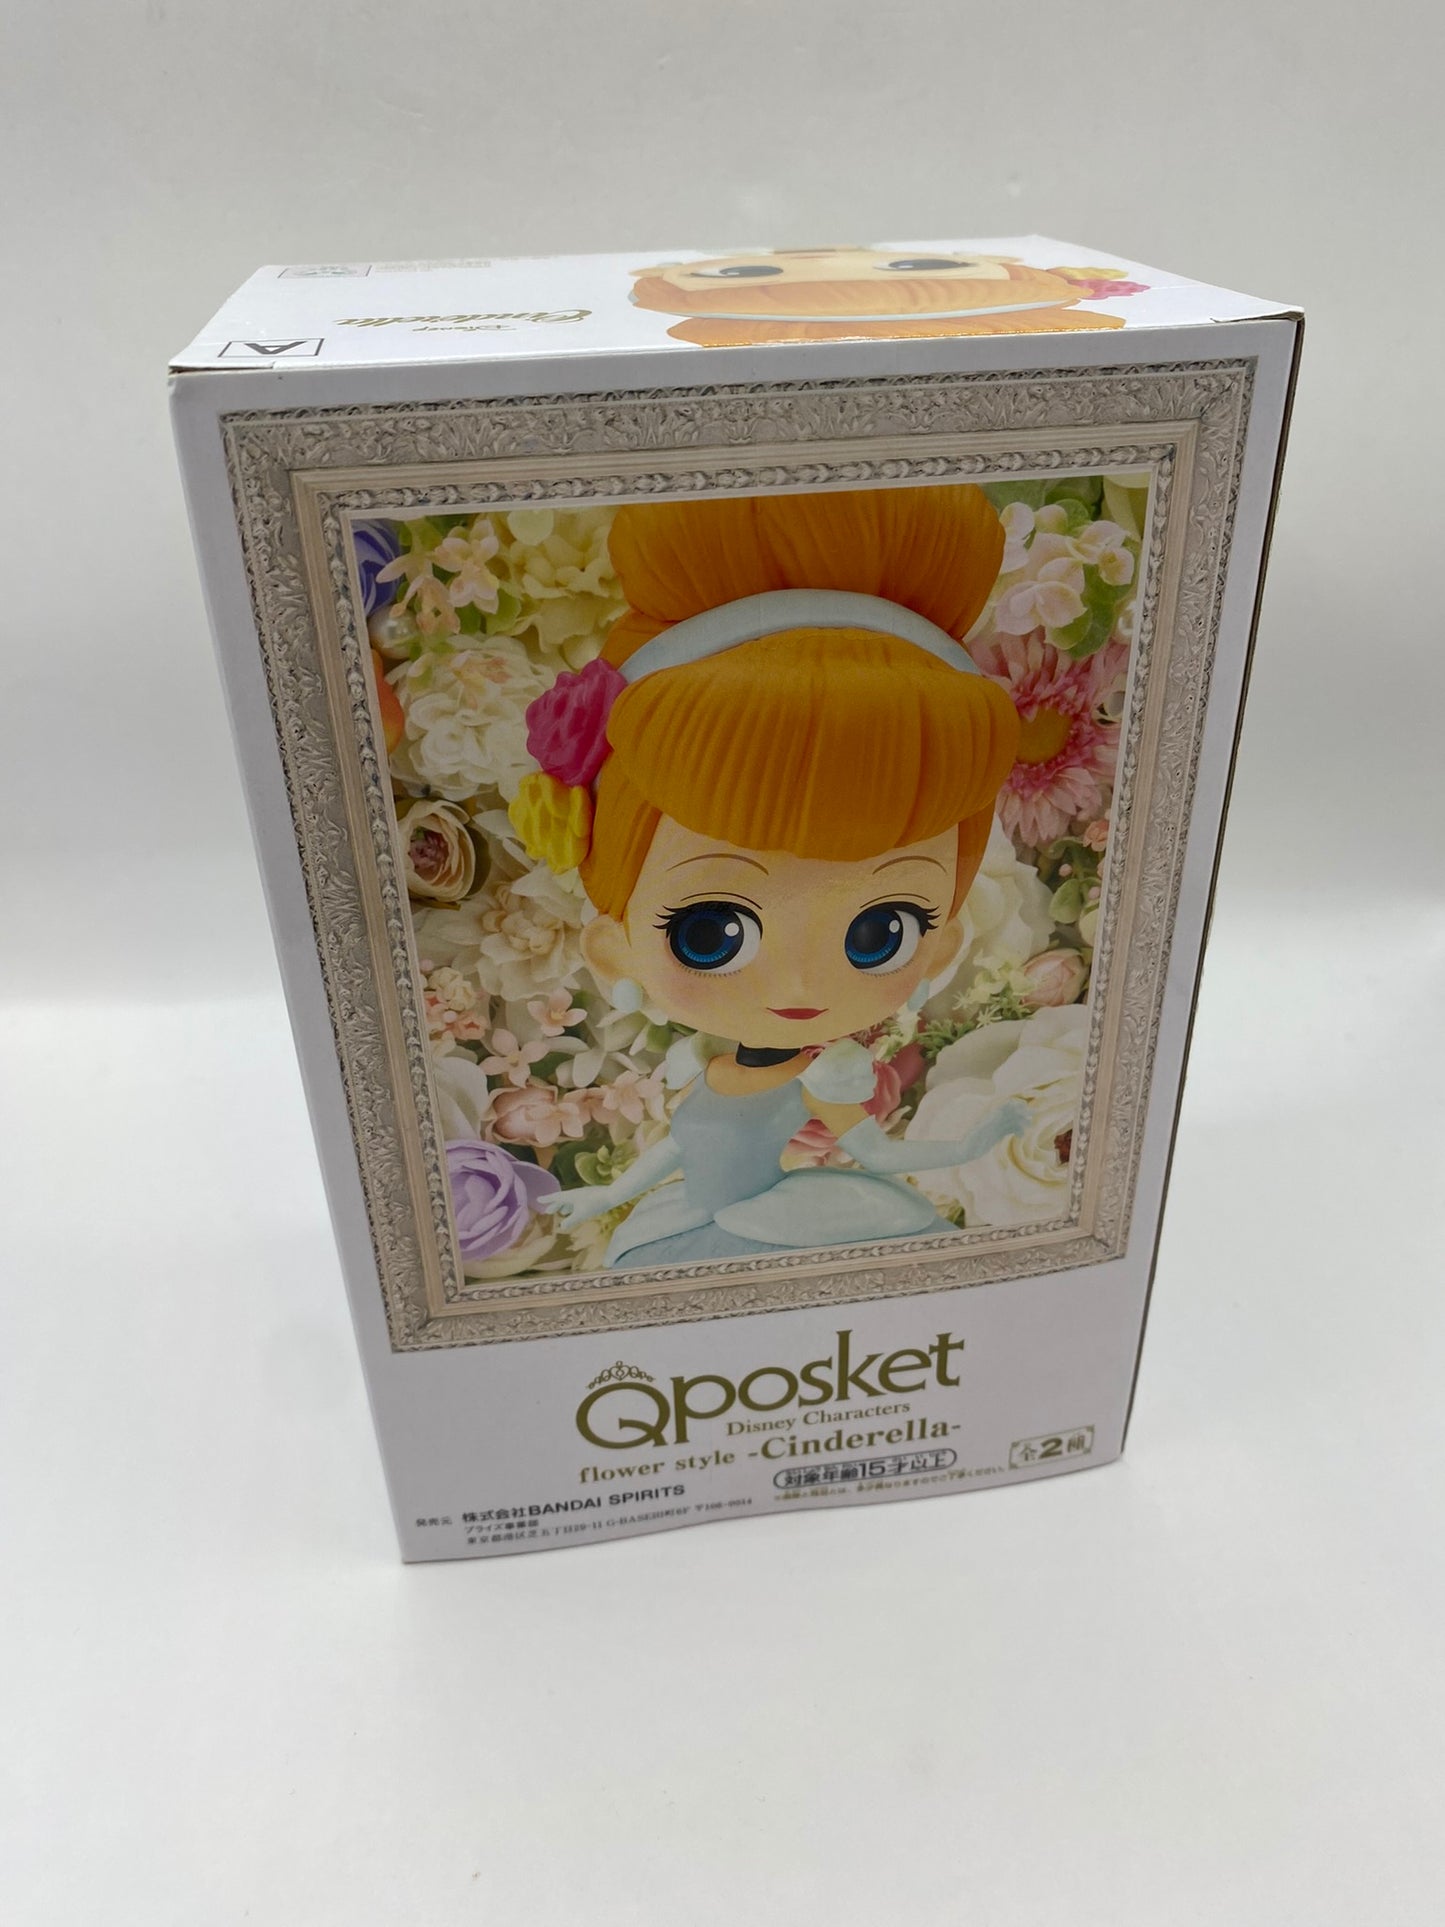 QPosket Disney Characters Flower Style Cinderella Bandai Banpresto Figurine